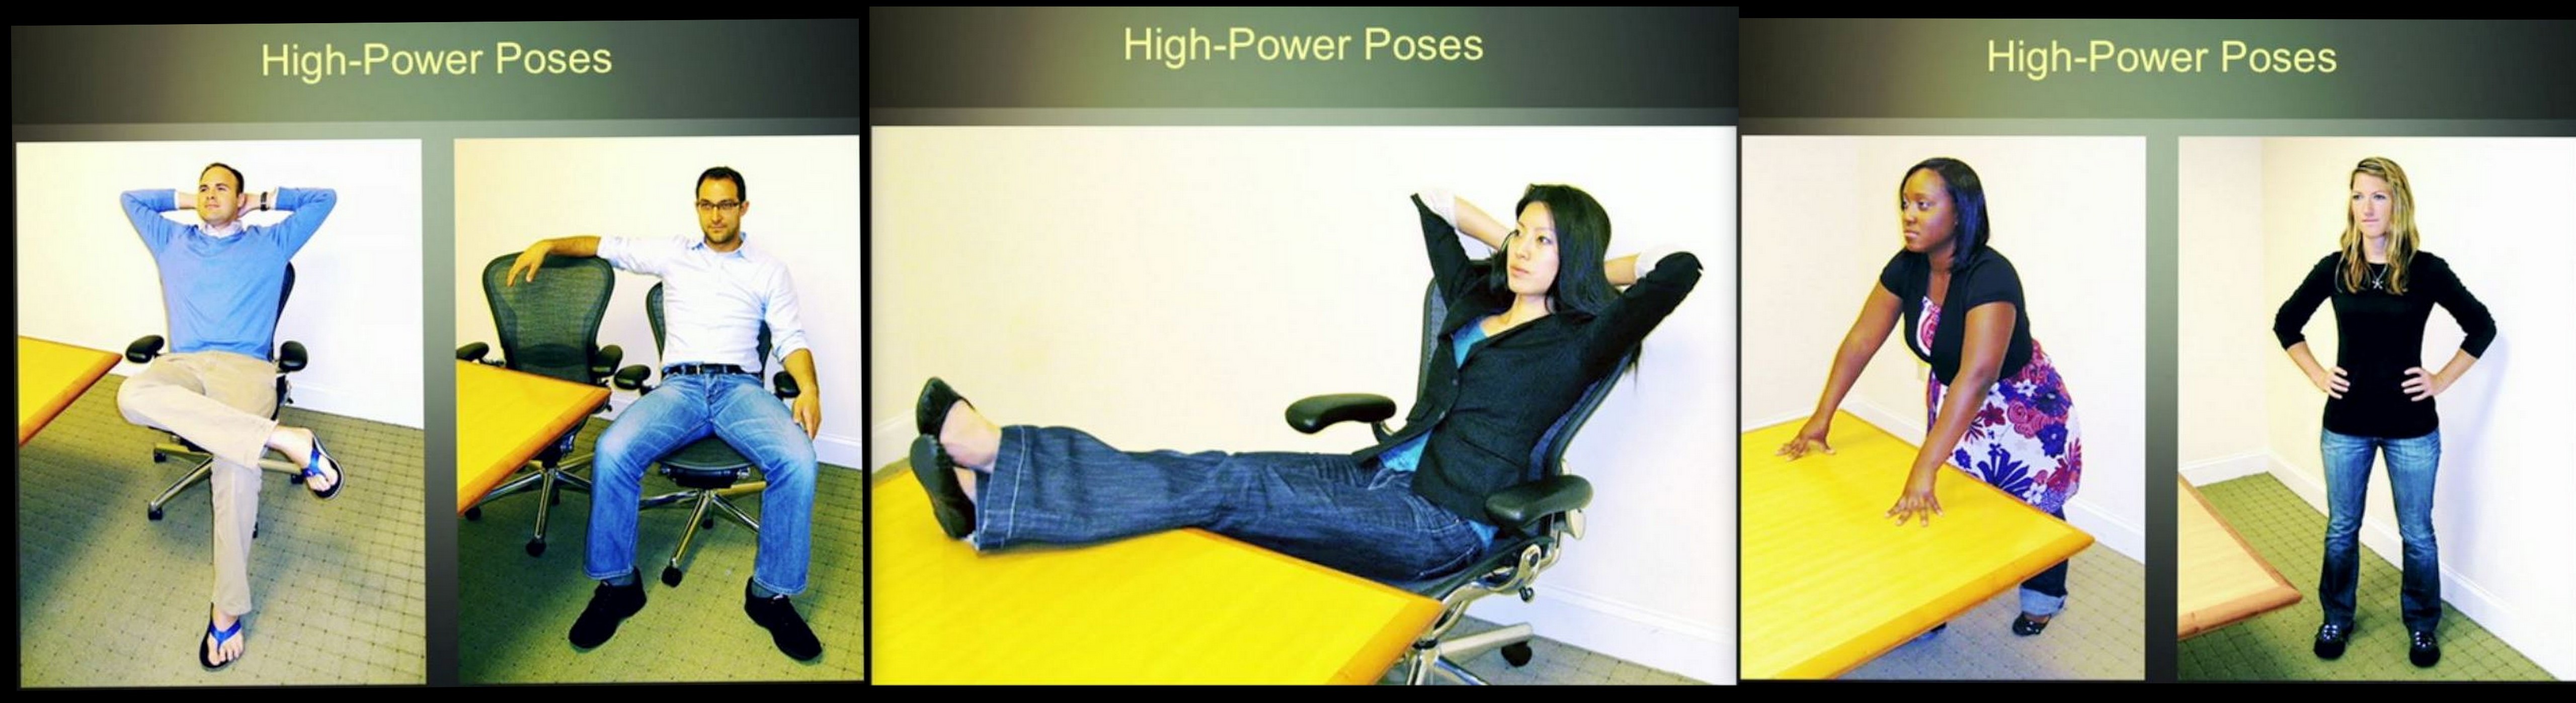 high power pose